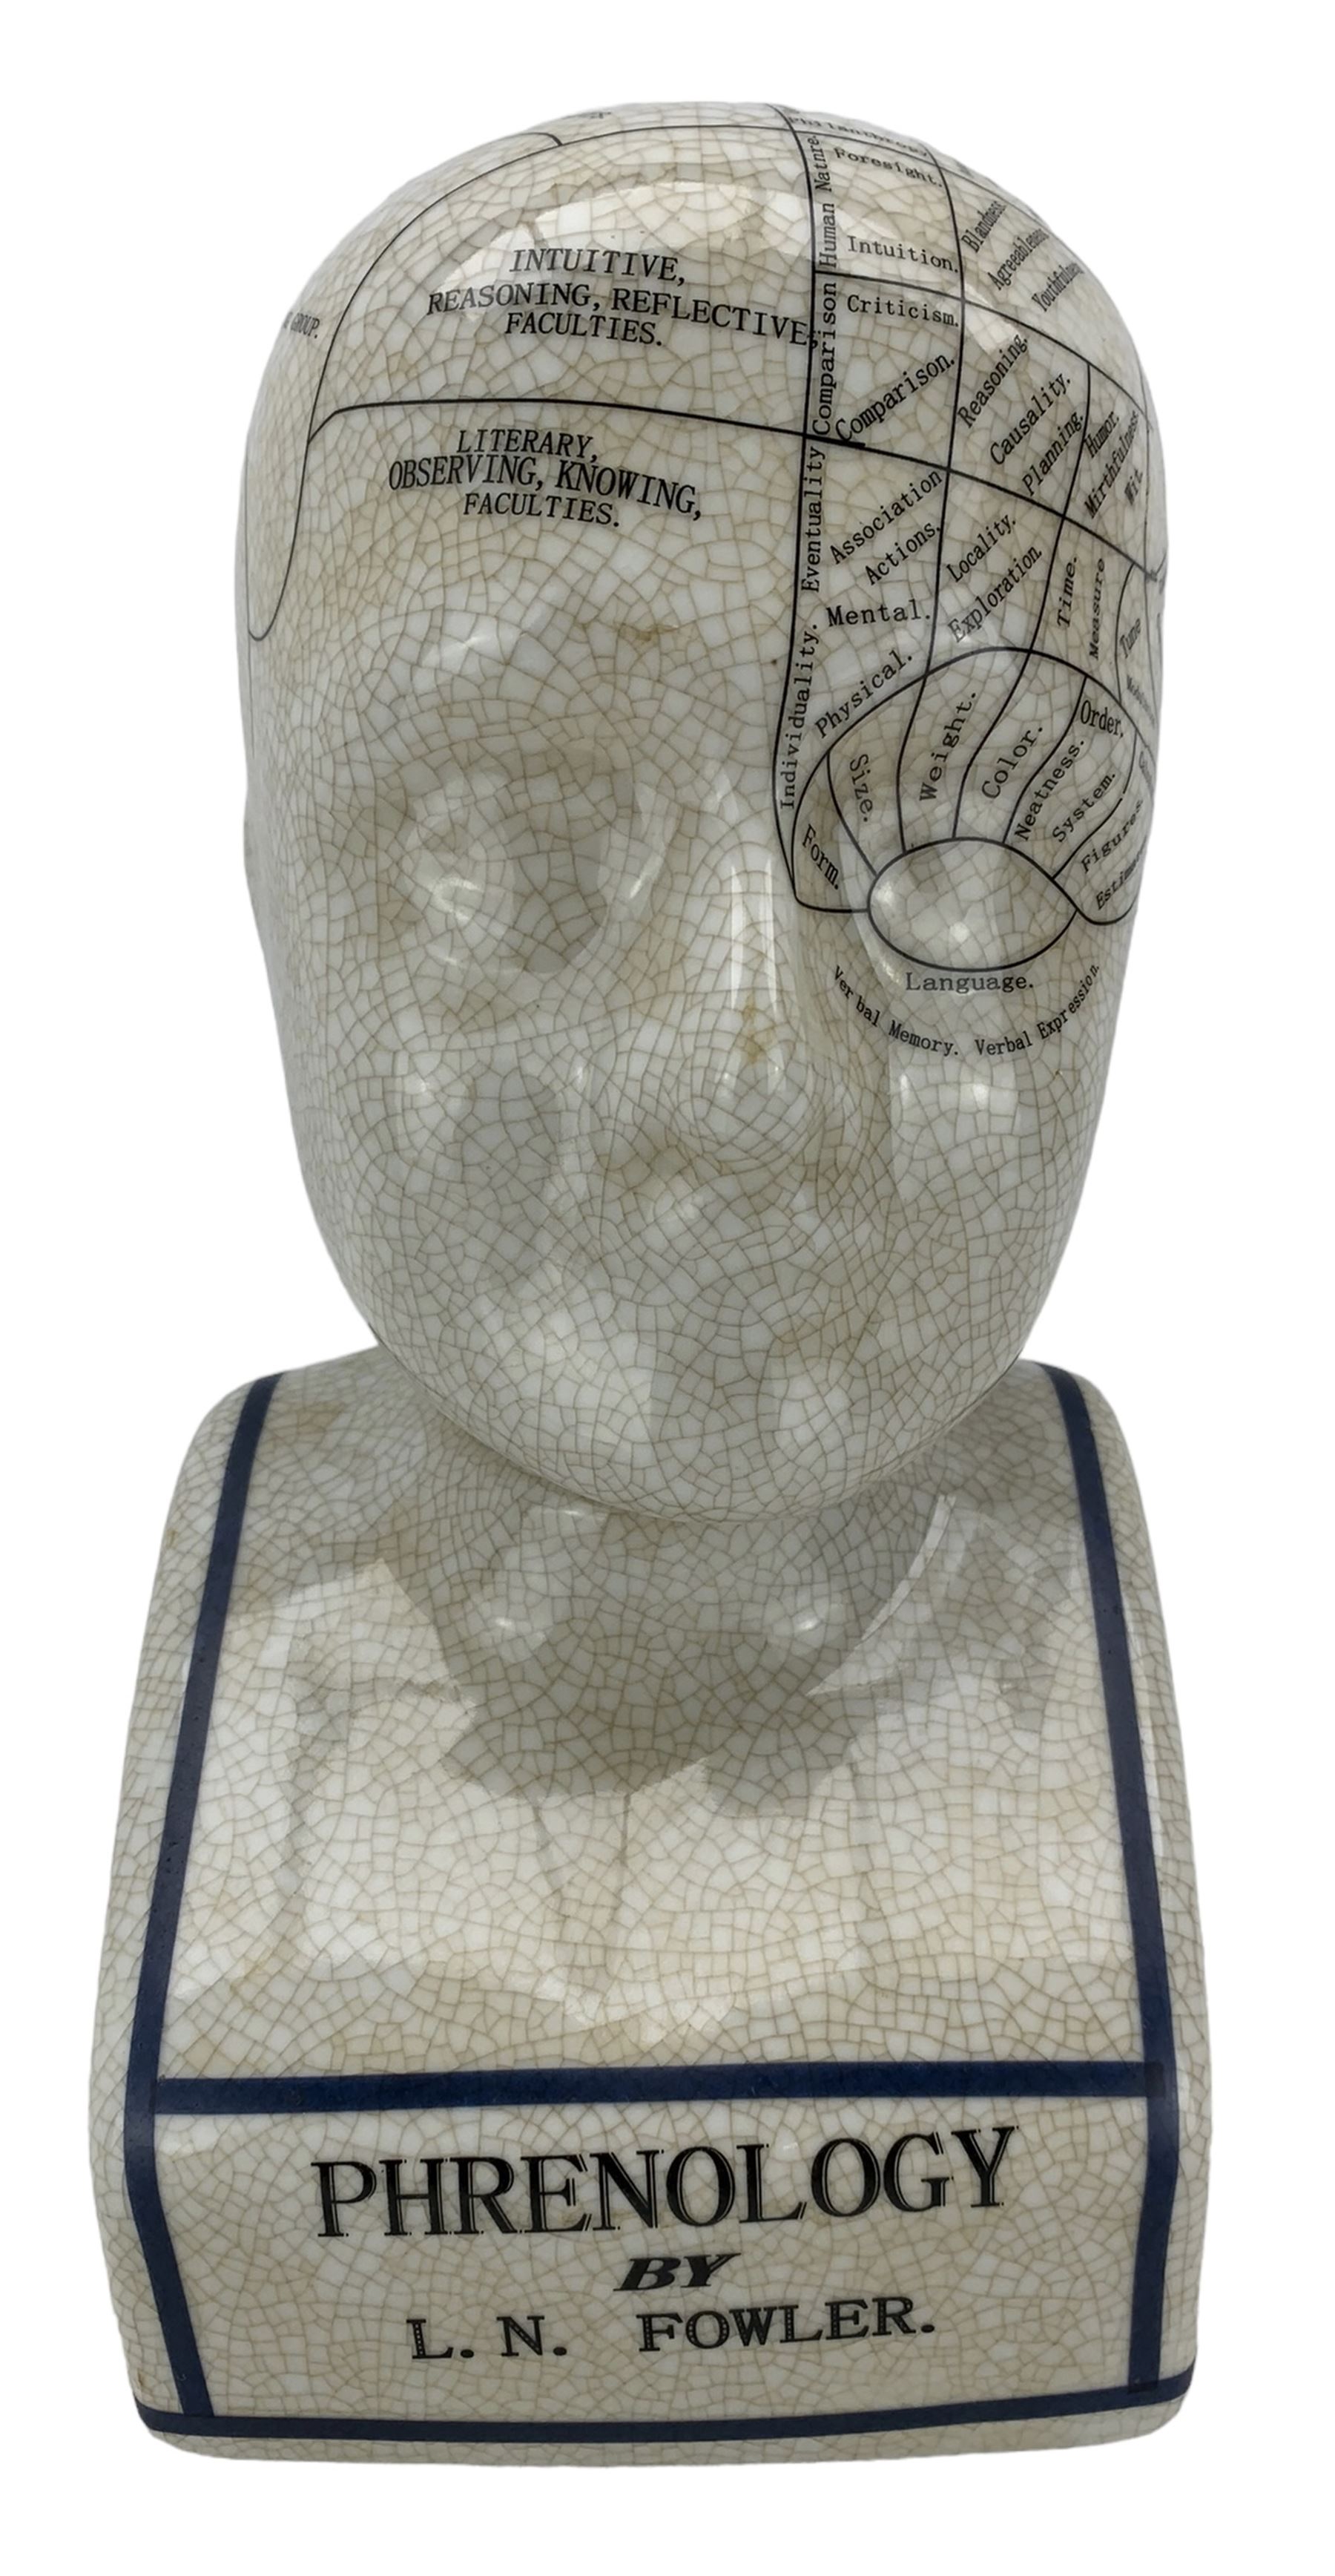 Ceramic Phrenology bust after L.N. Fowler